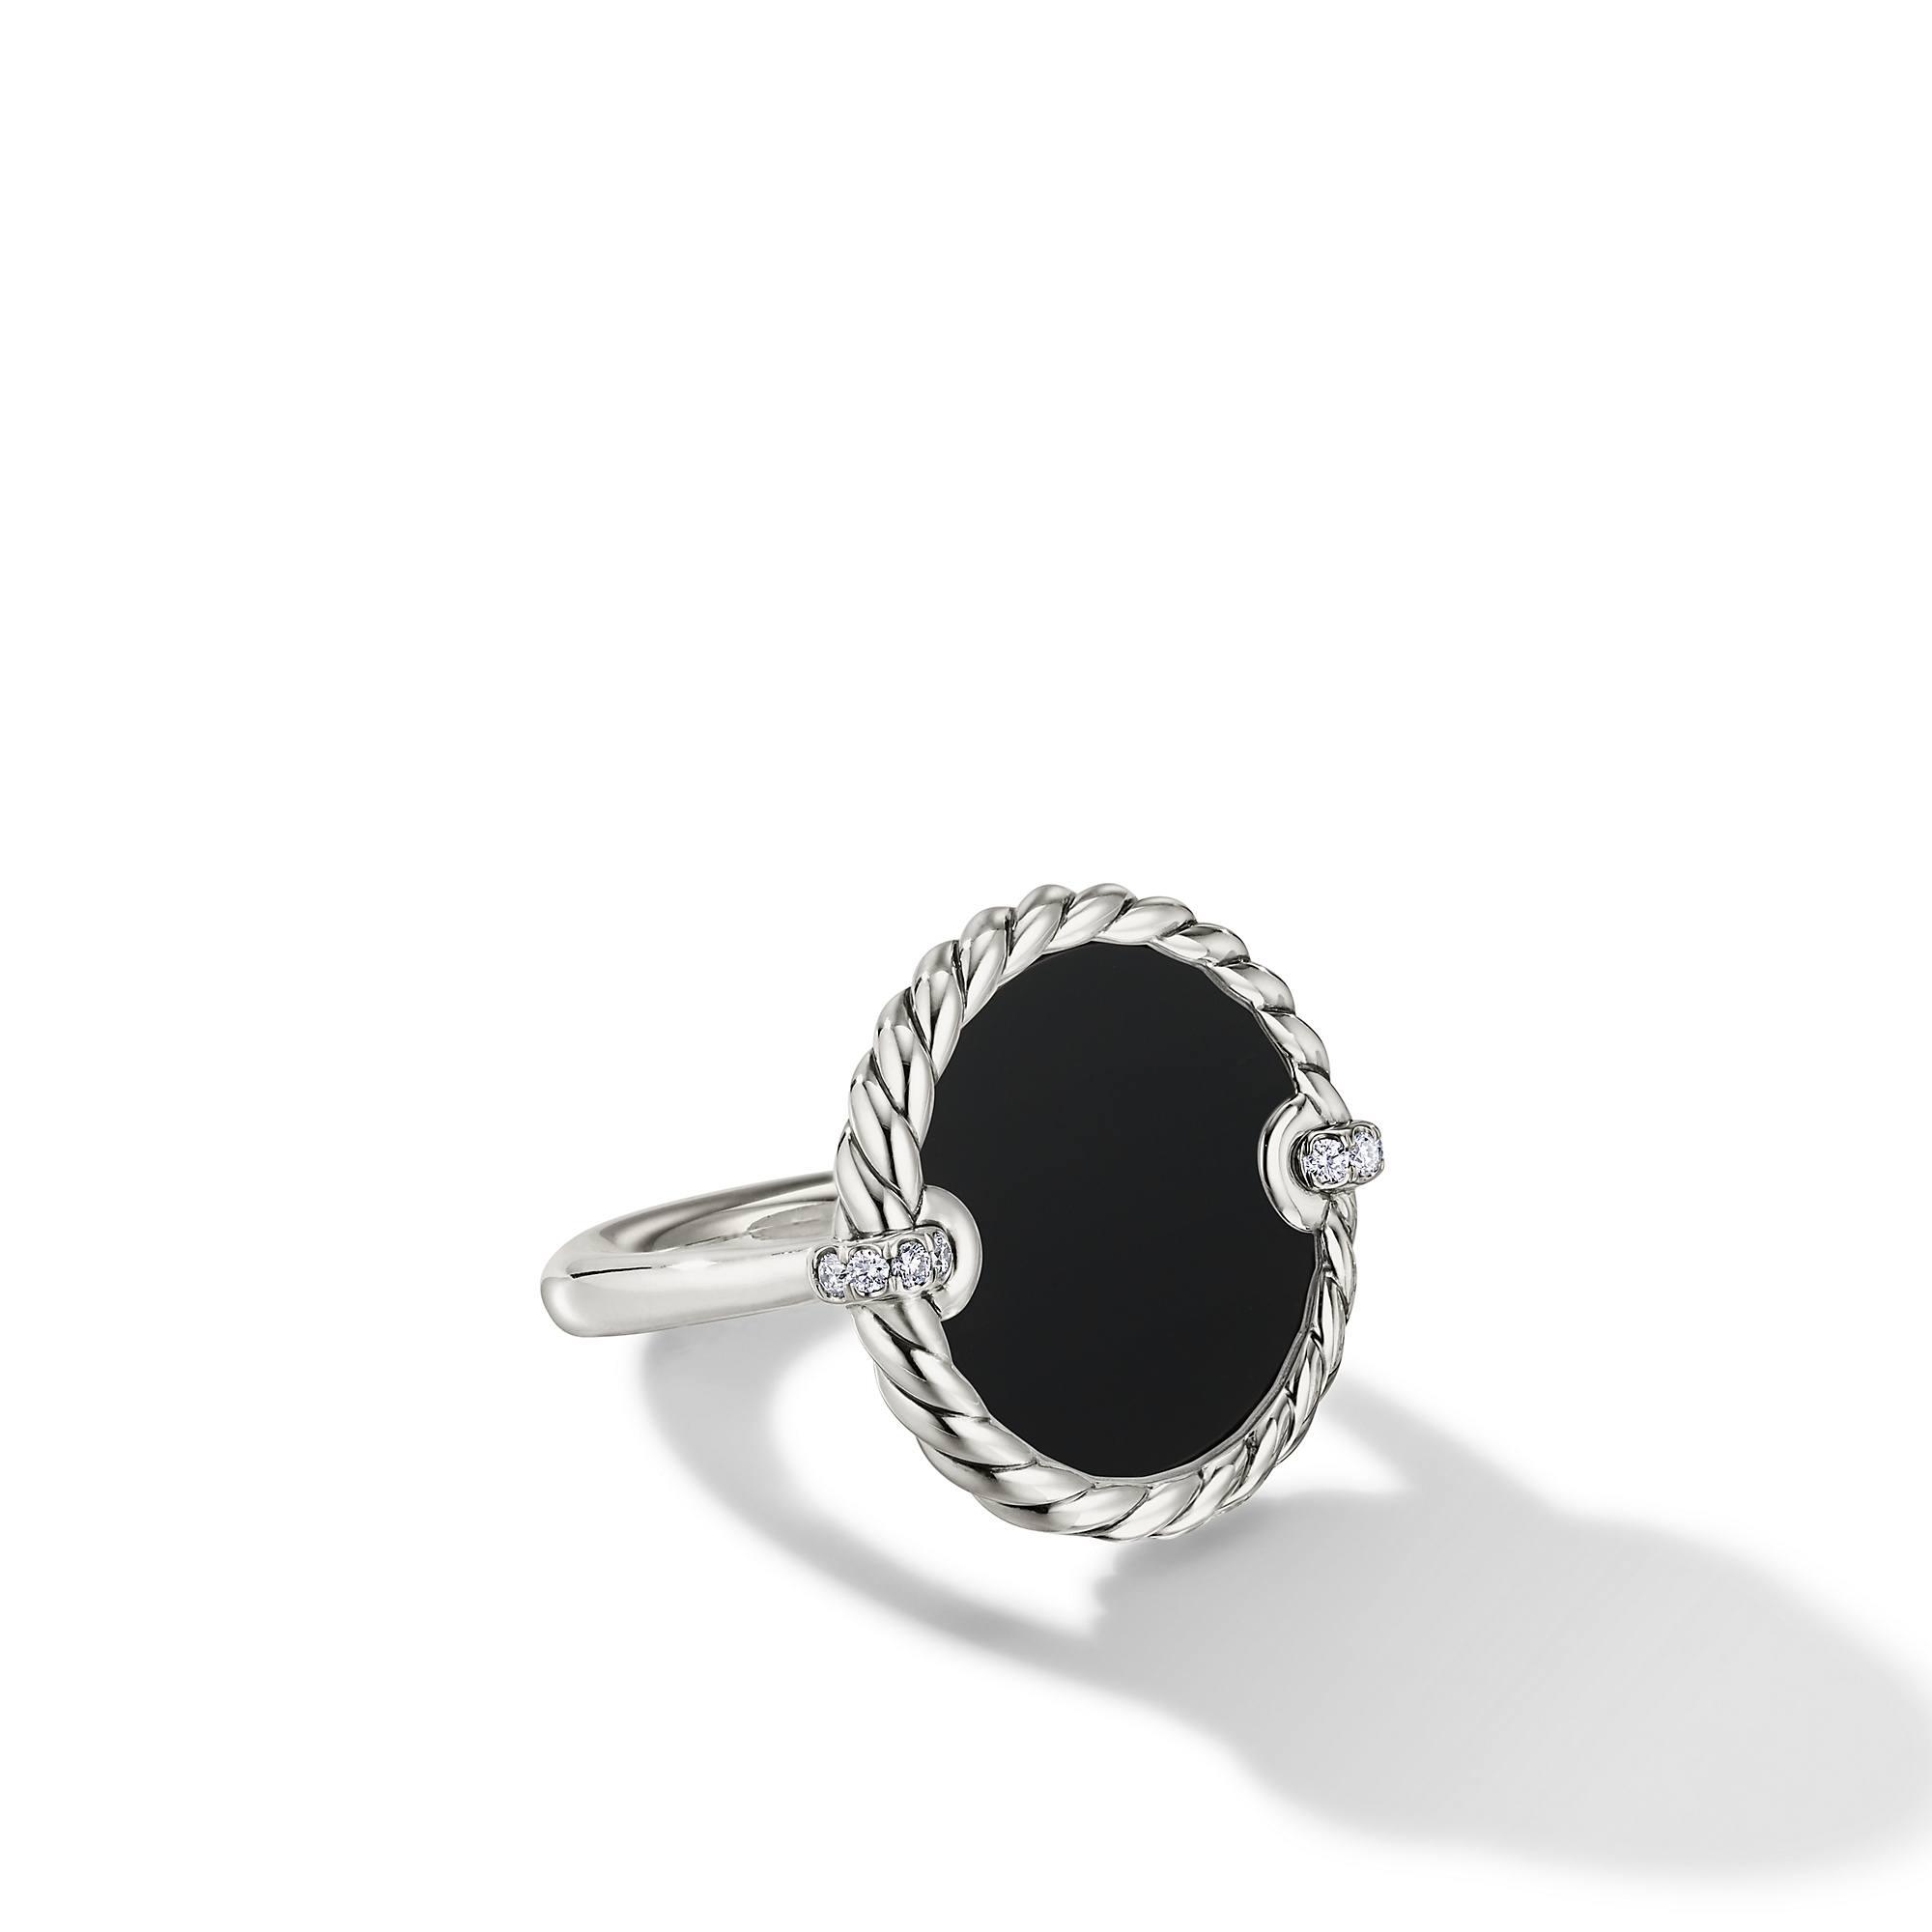 David Yurman Elements Ring with Black Onyx and Pave Diamonds, size 6.5